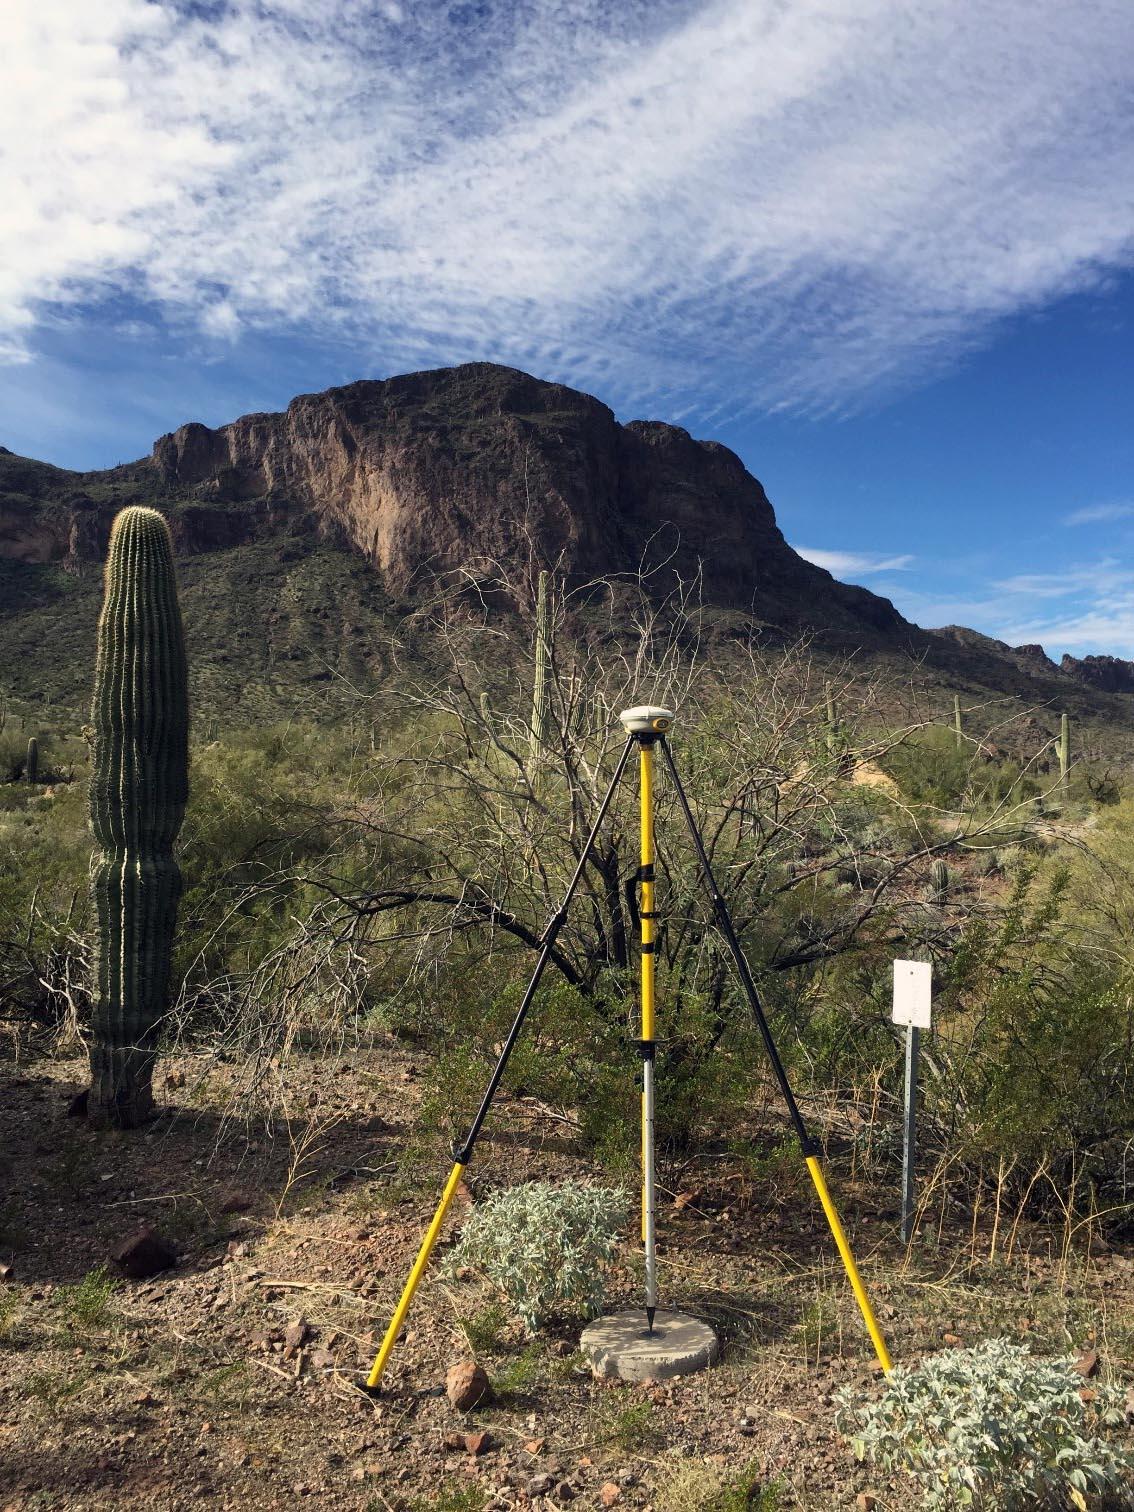 Equipment collecting Global Navigation Satellite System (GNSS) data near Tucson, Arizona